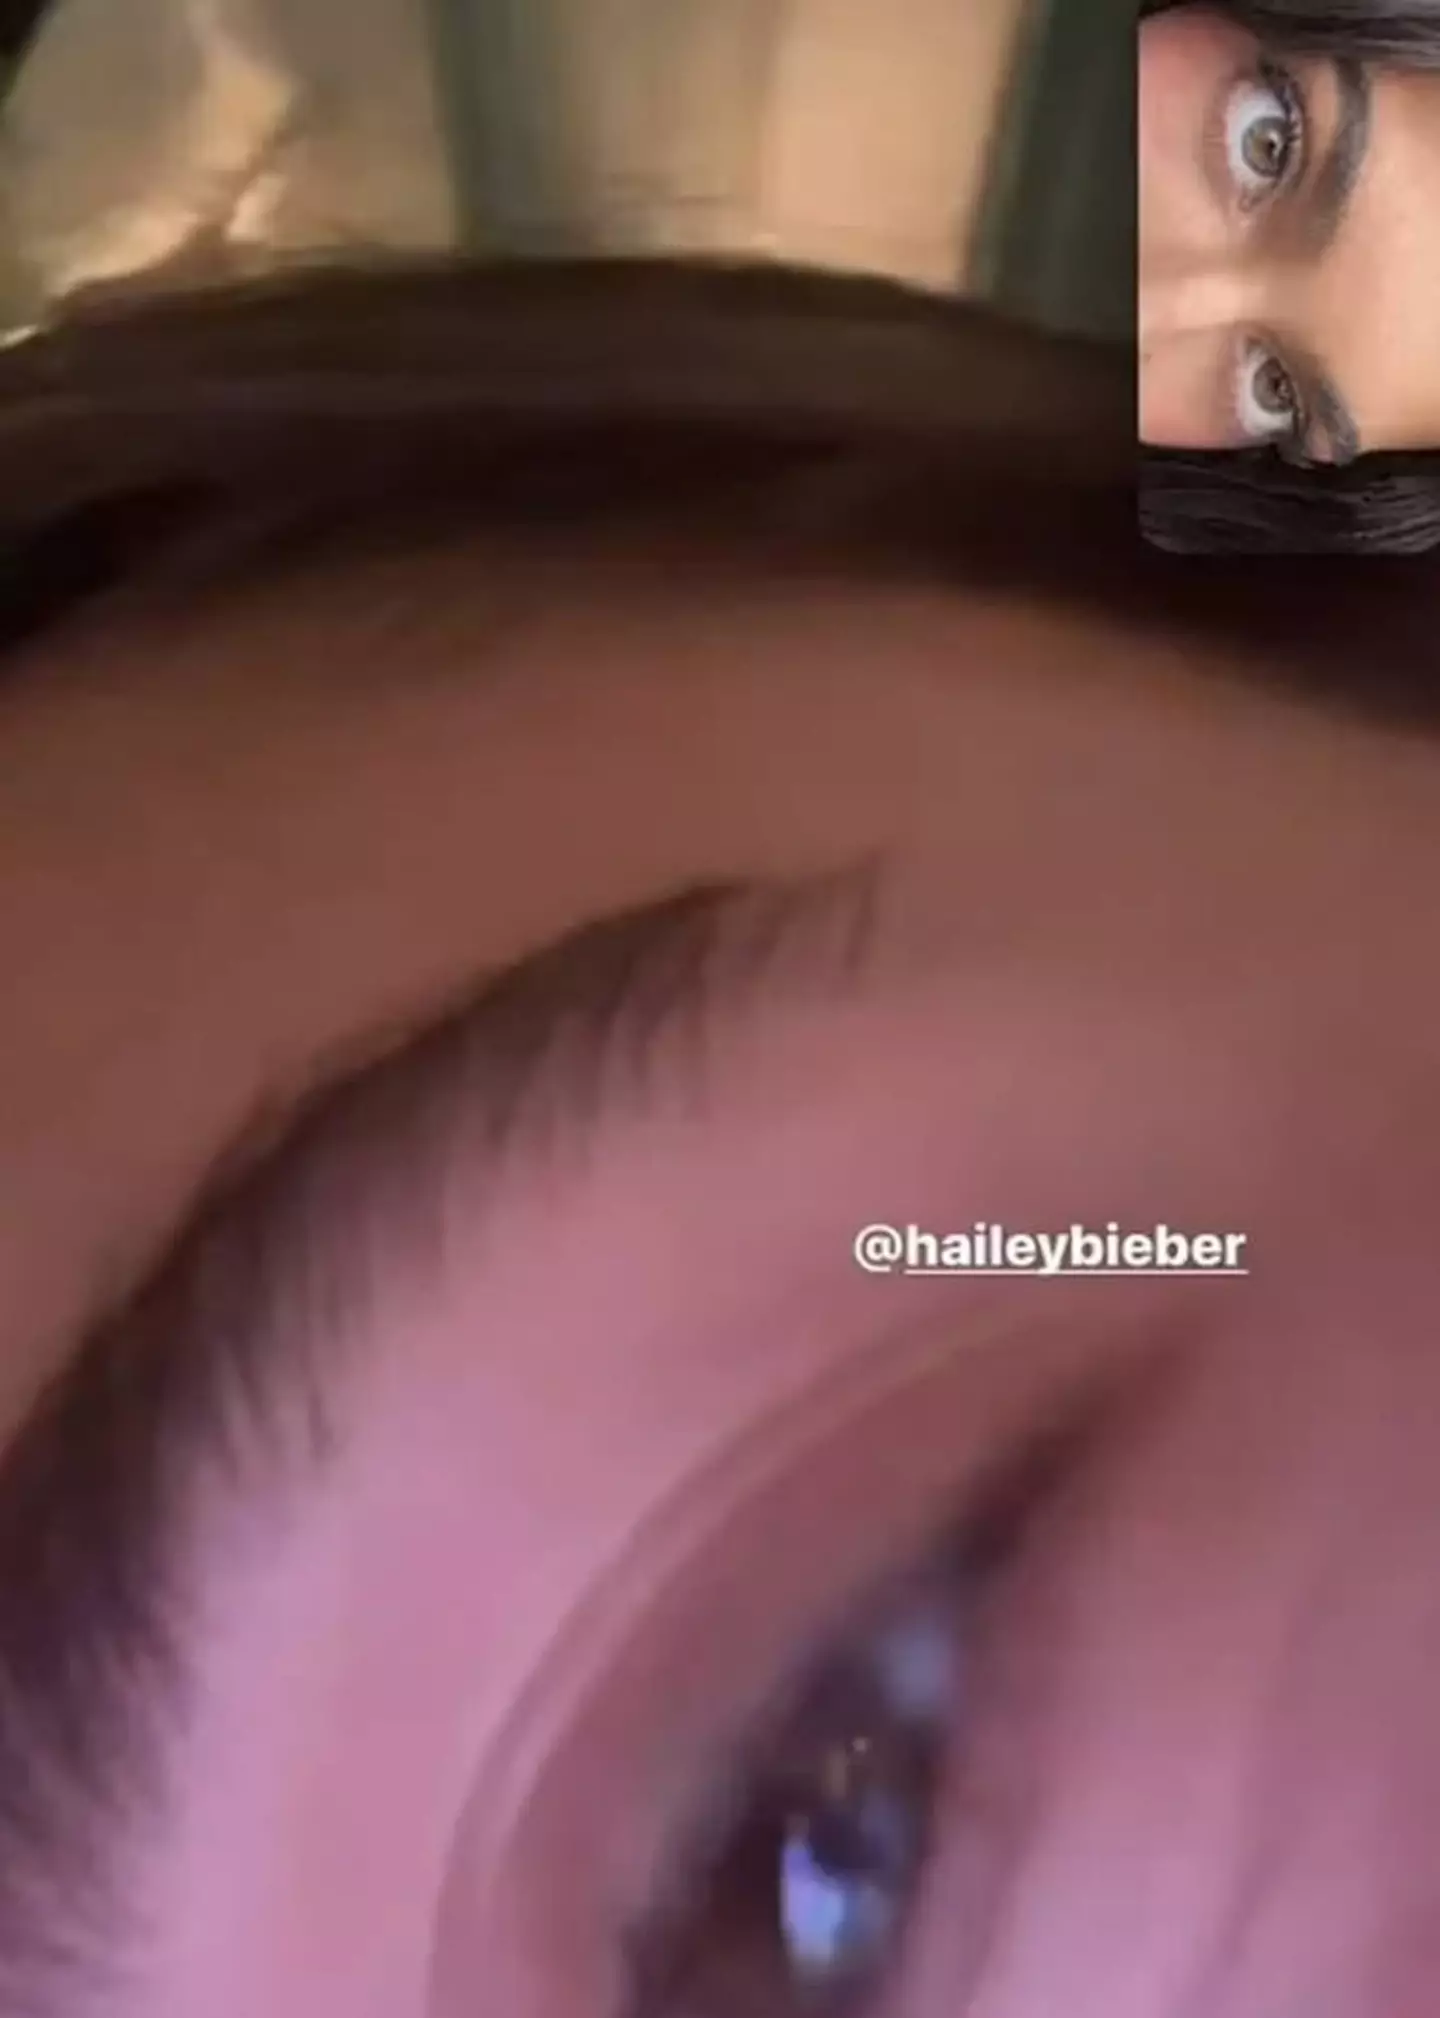 Kylie shared a screenshot from FaceTime.